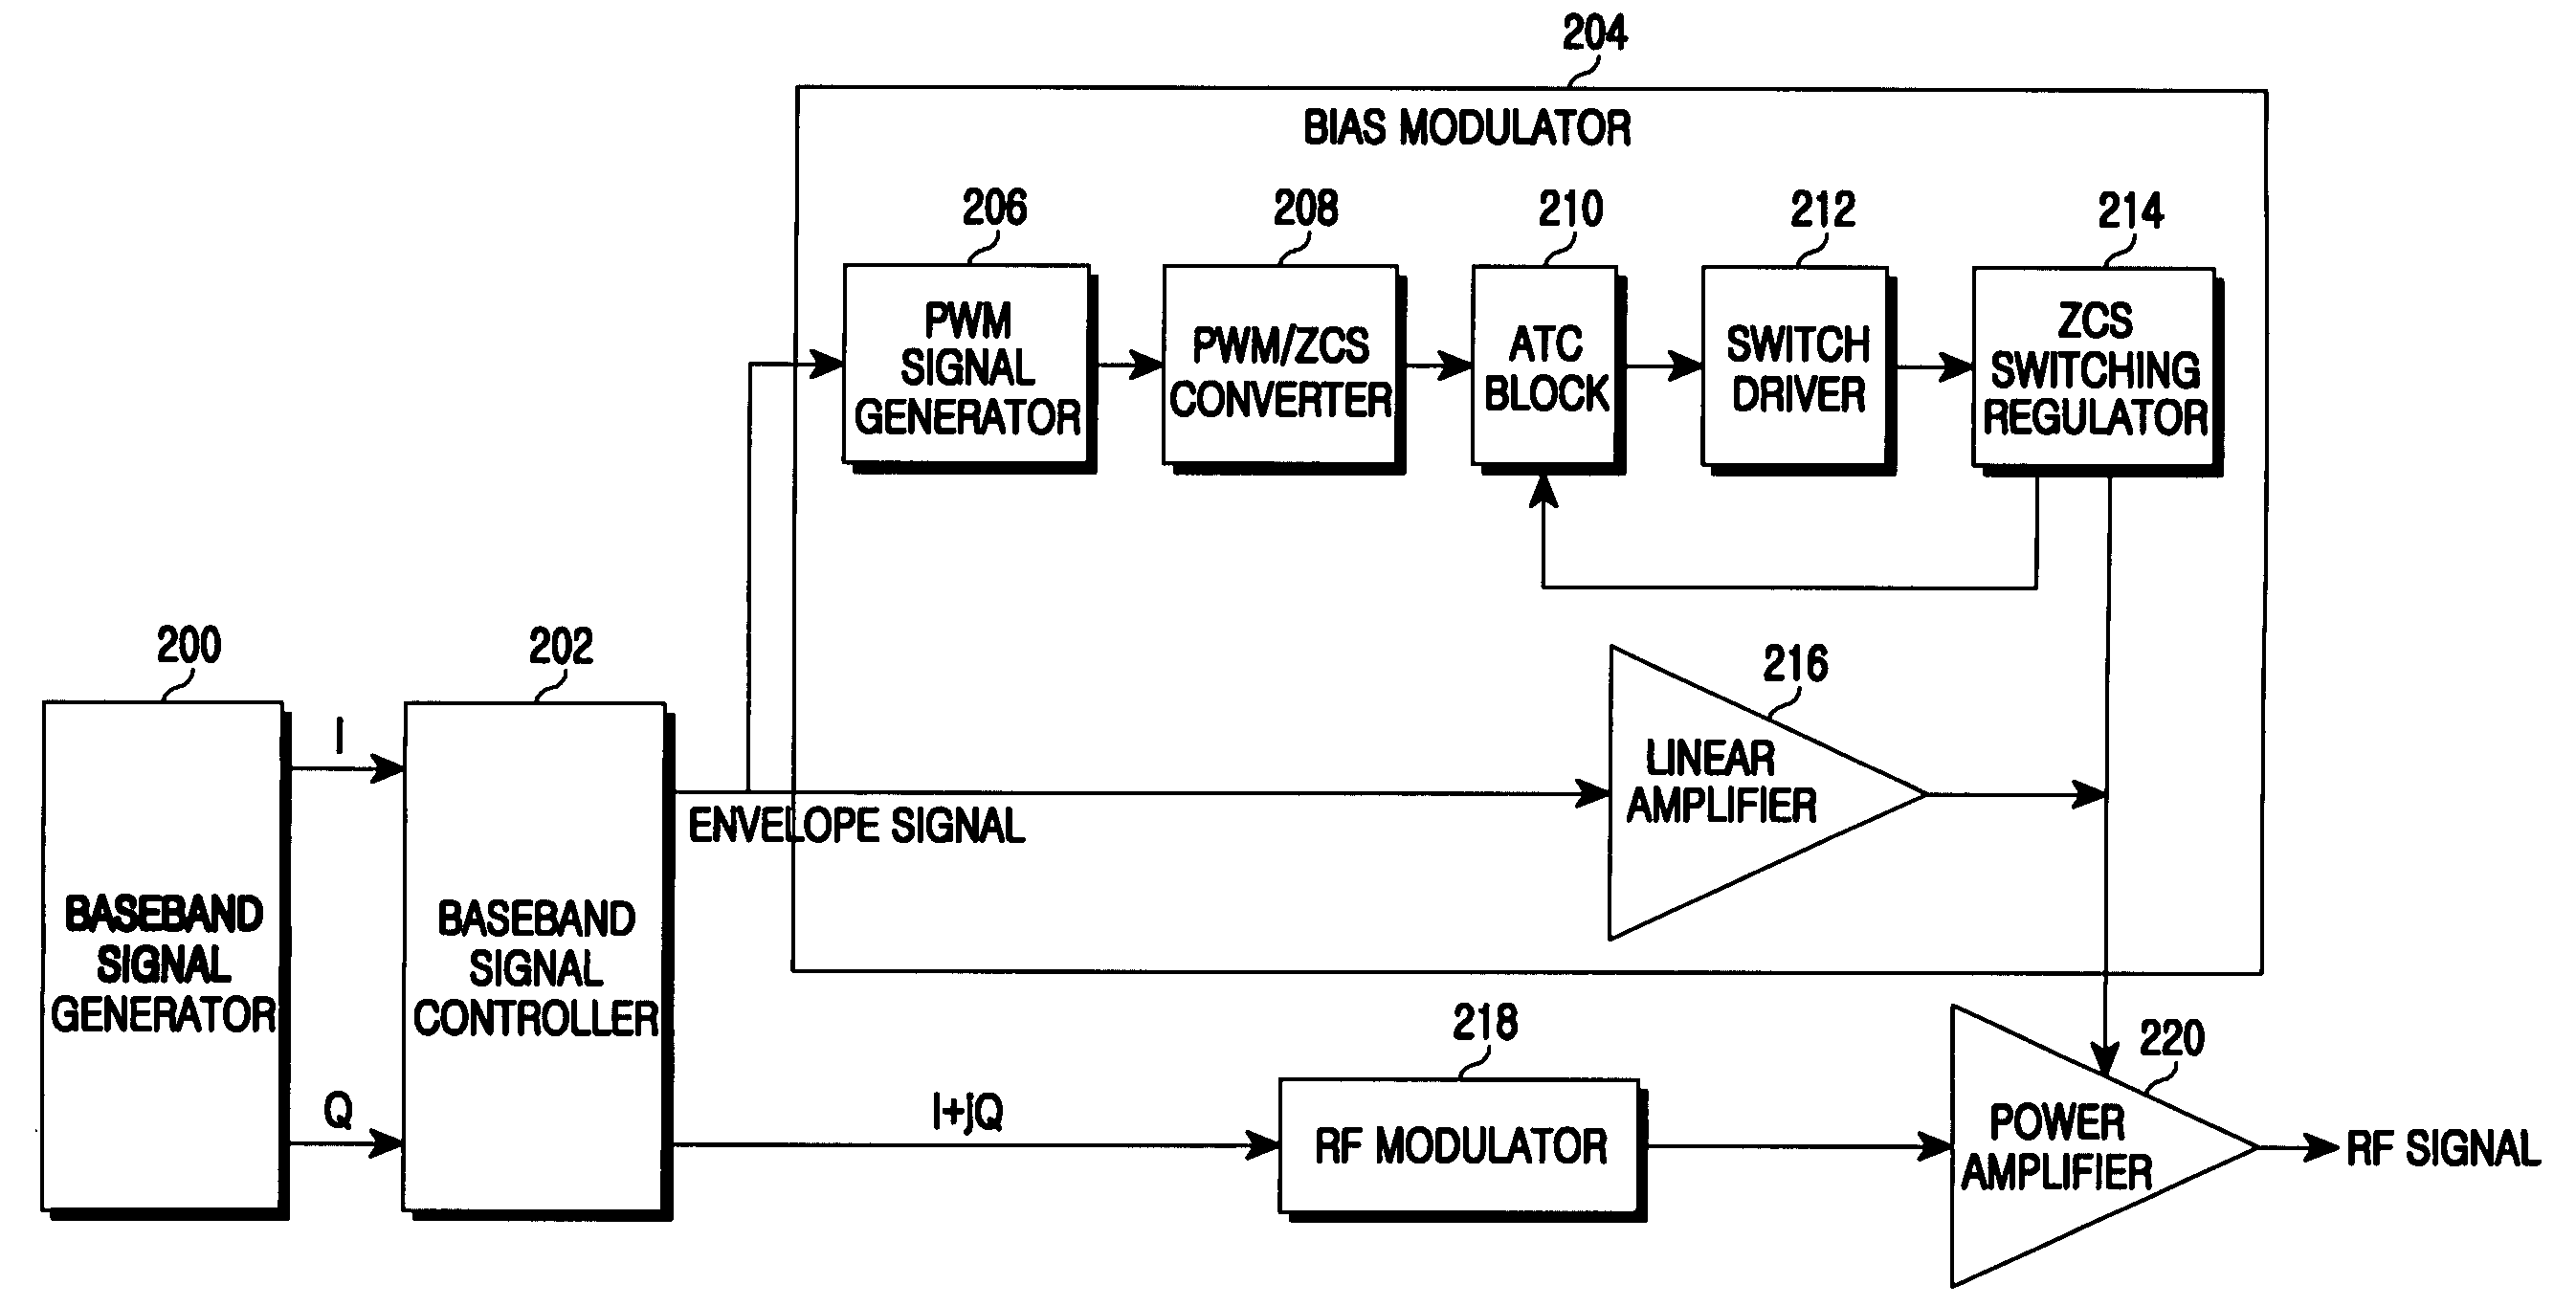 Apparatus and method for bias modulator using zero current switching